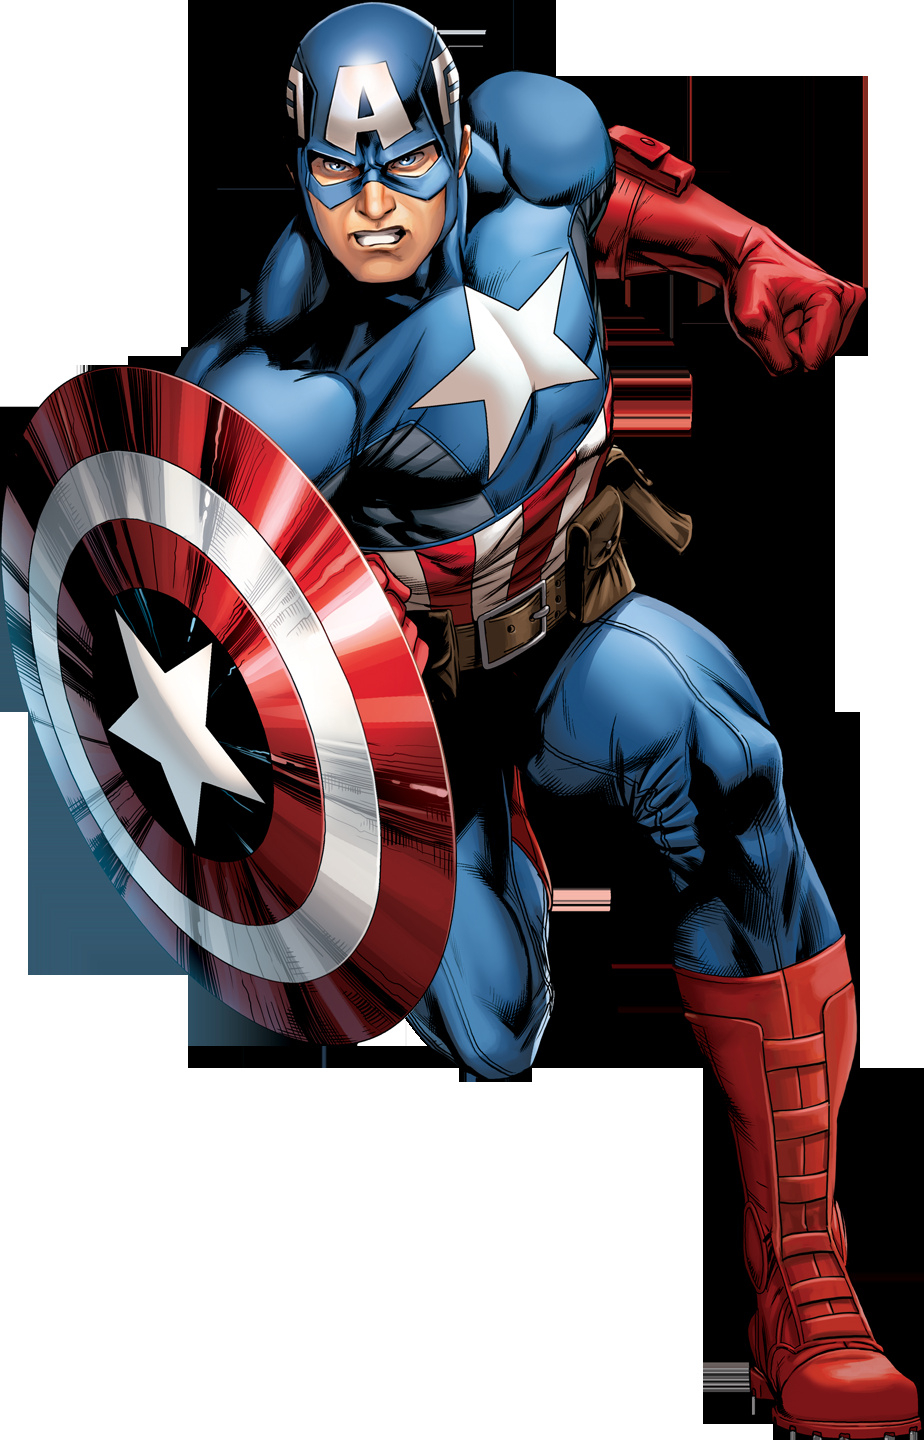 12 Inspirant De Captain America Dessin Images - Coloriage destiné Dessin Capitaine America 